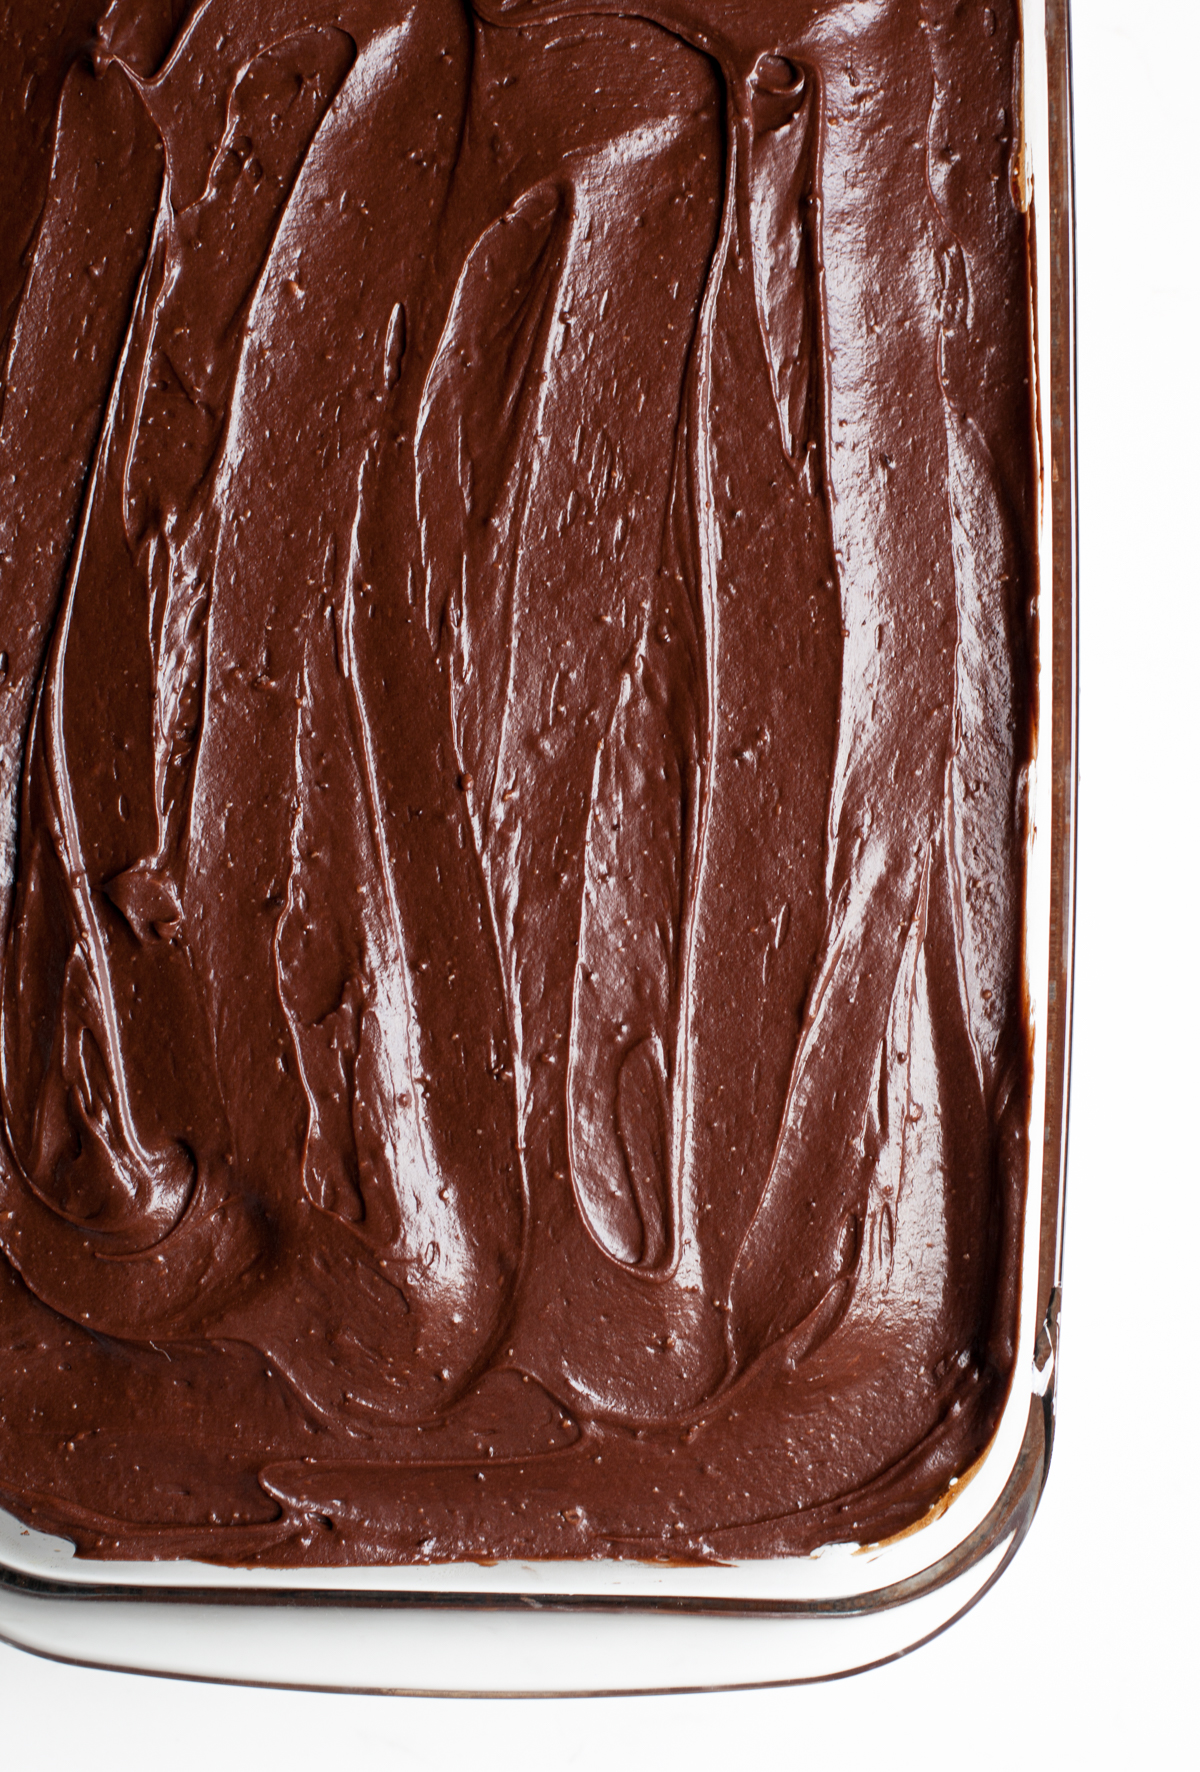 Best Chocolate Sheet Cake Recipe in Town